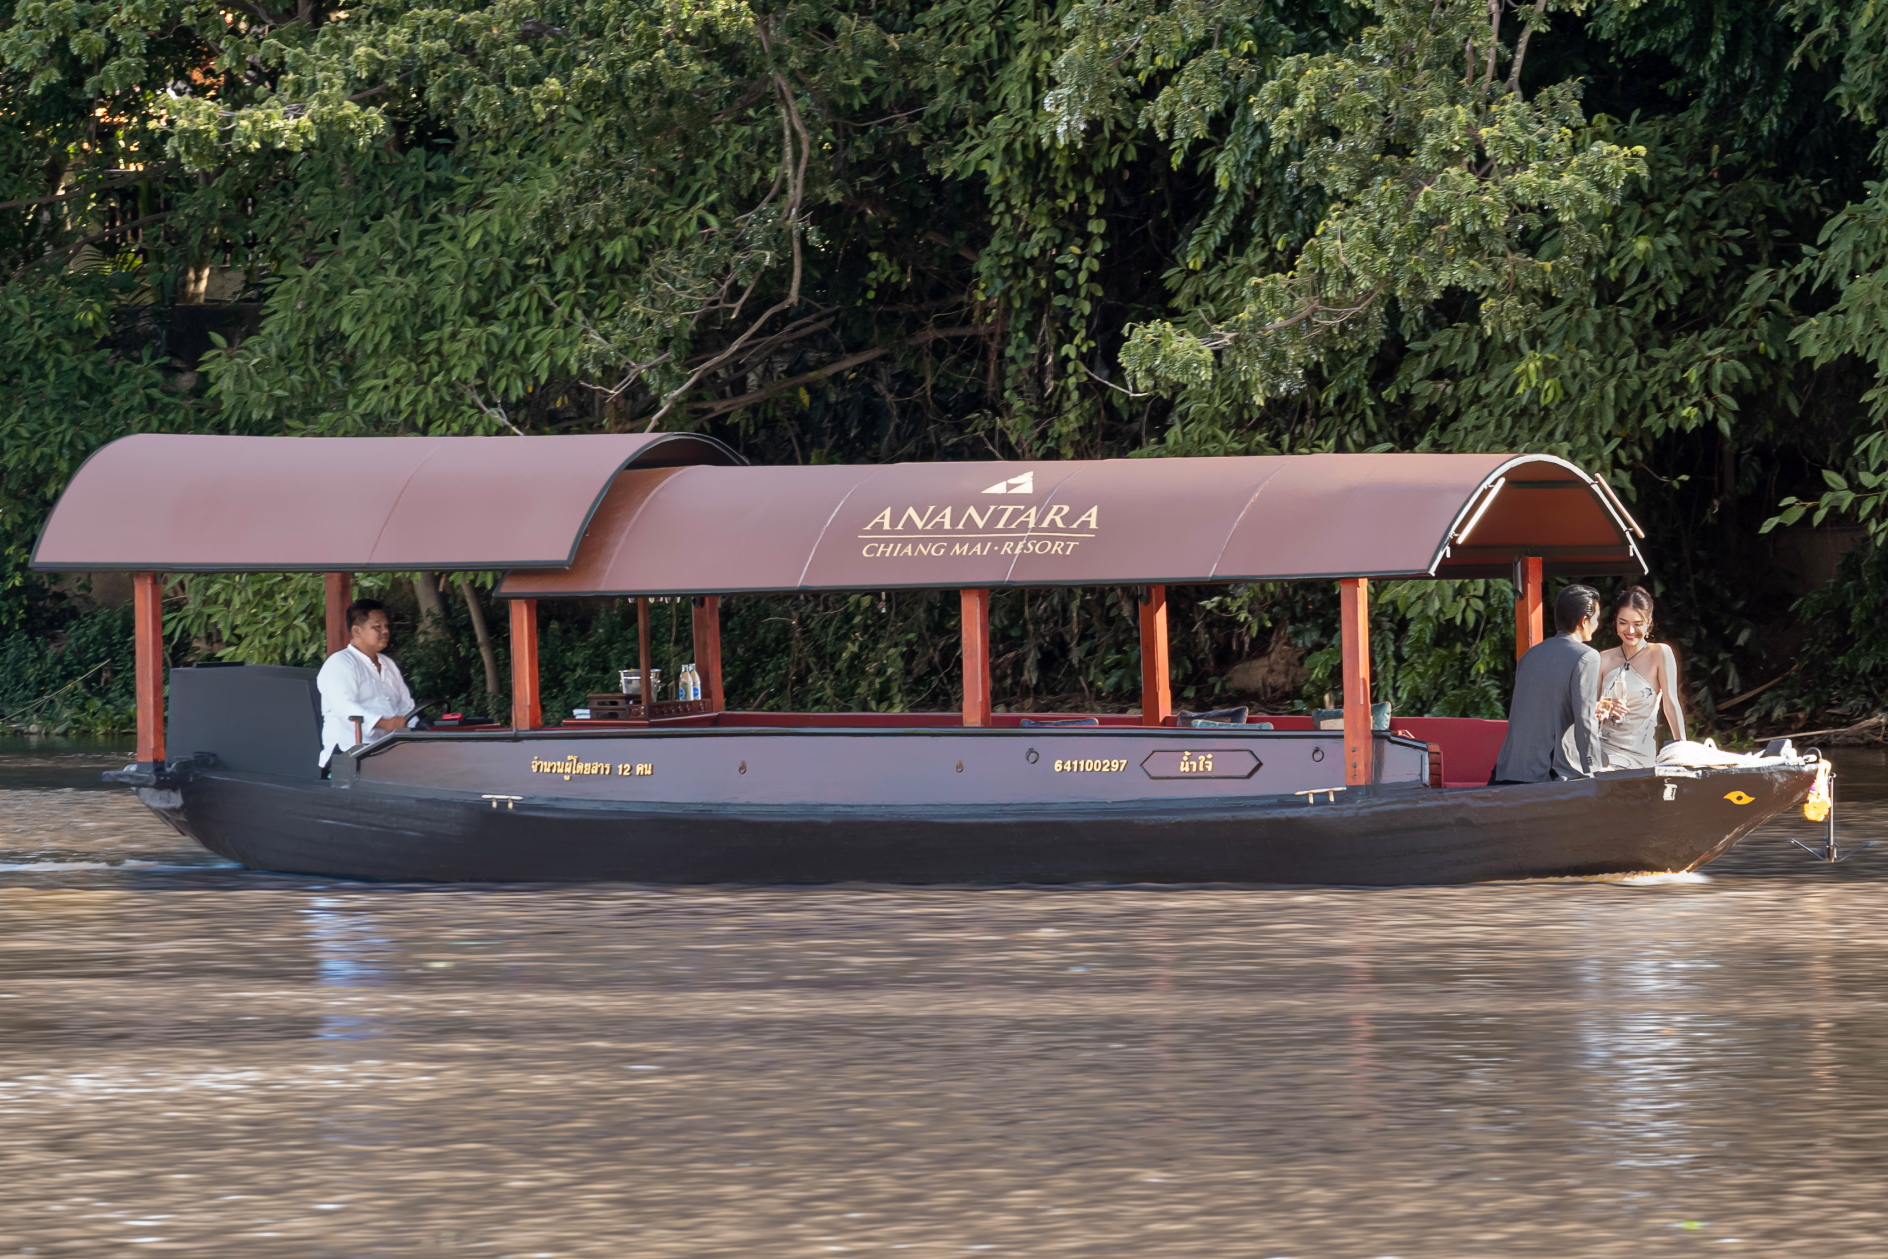 Anantara Chiang Mai's Nam Jai Ping River Cruise. Click to enlarge.